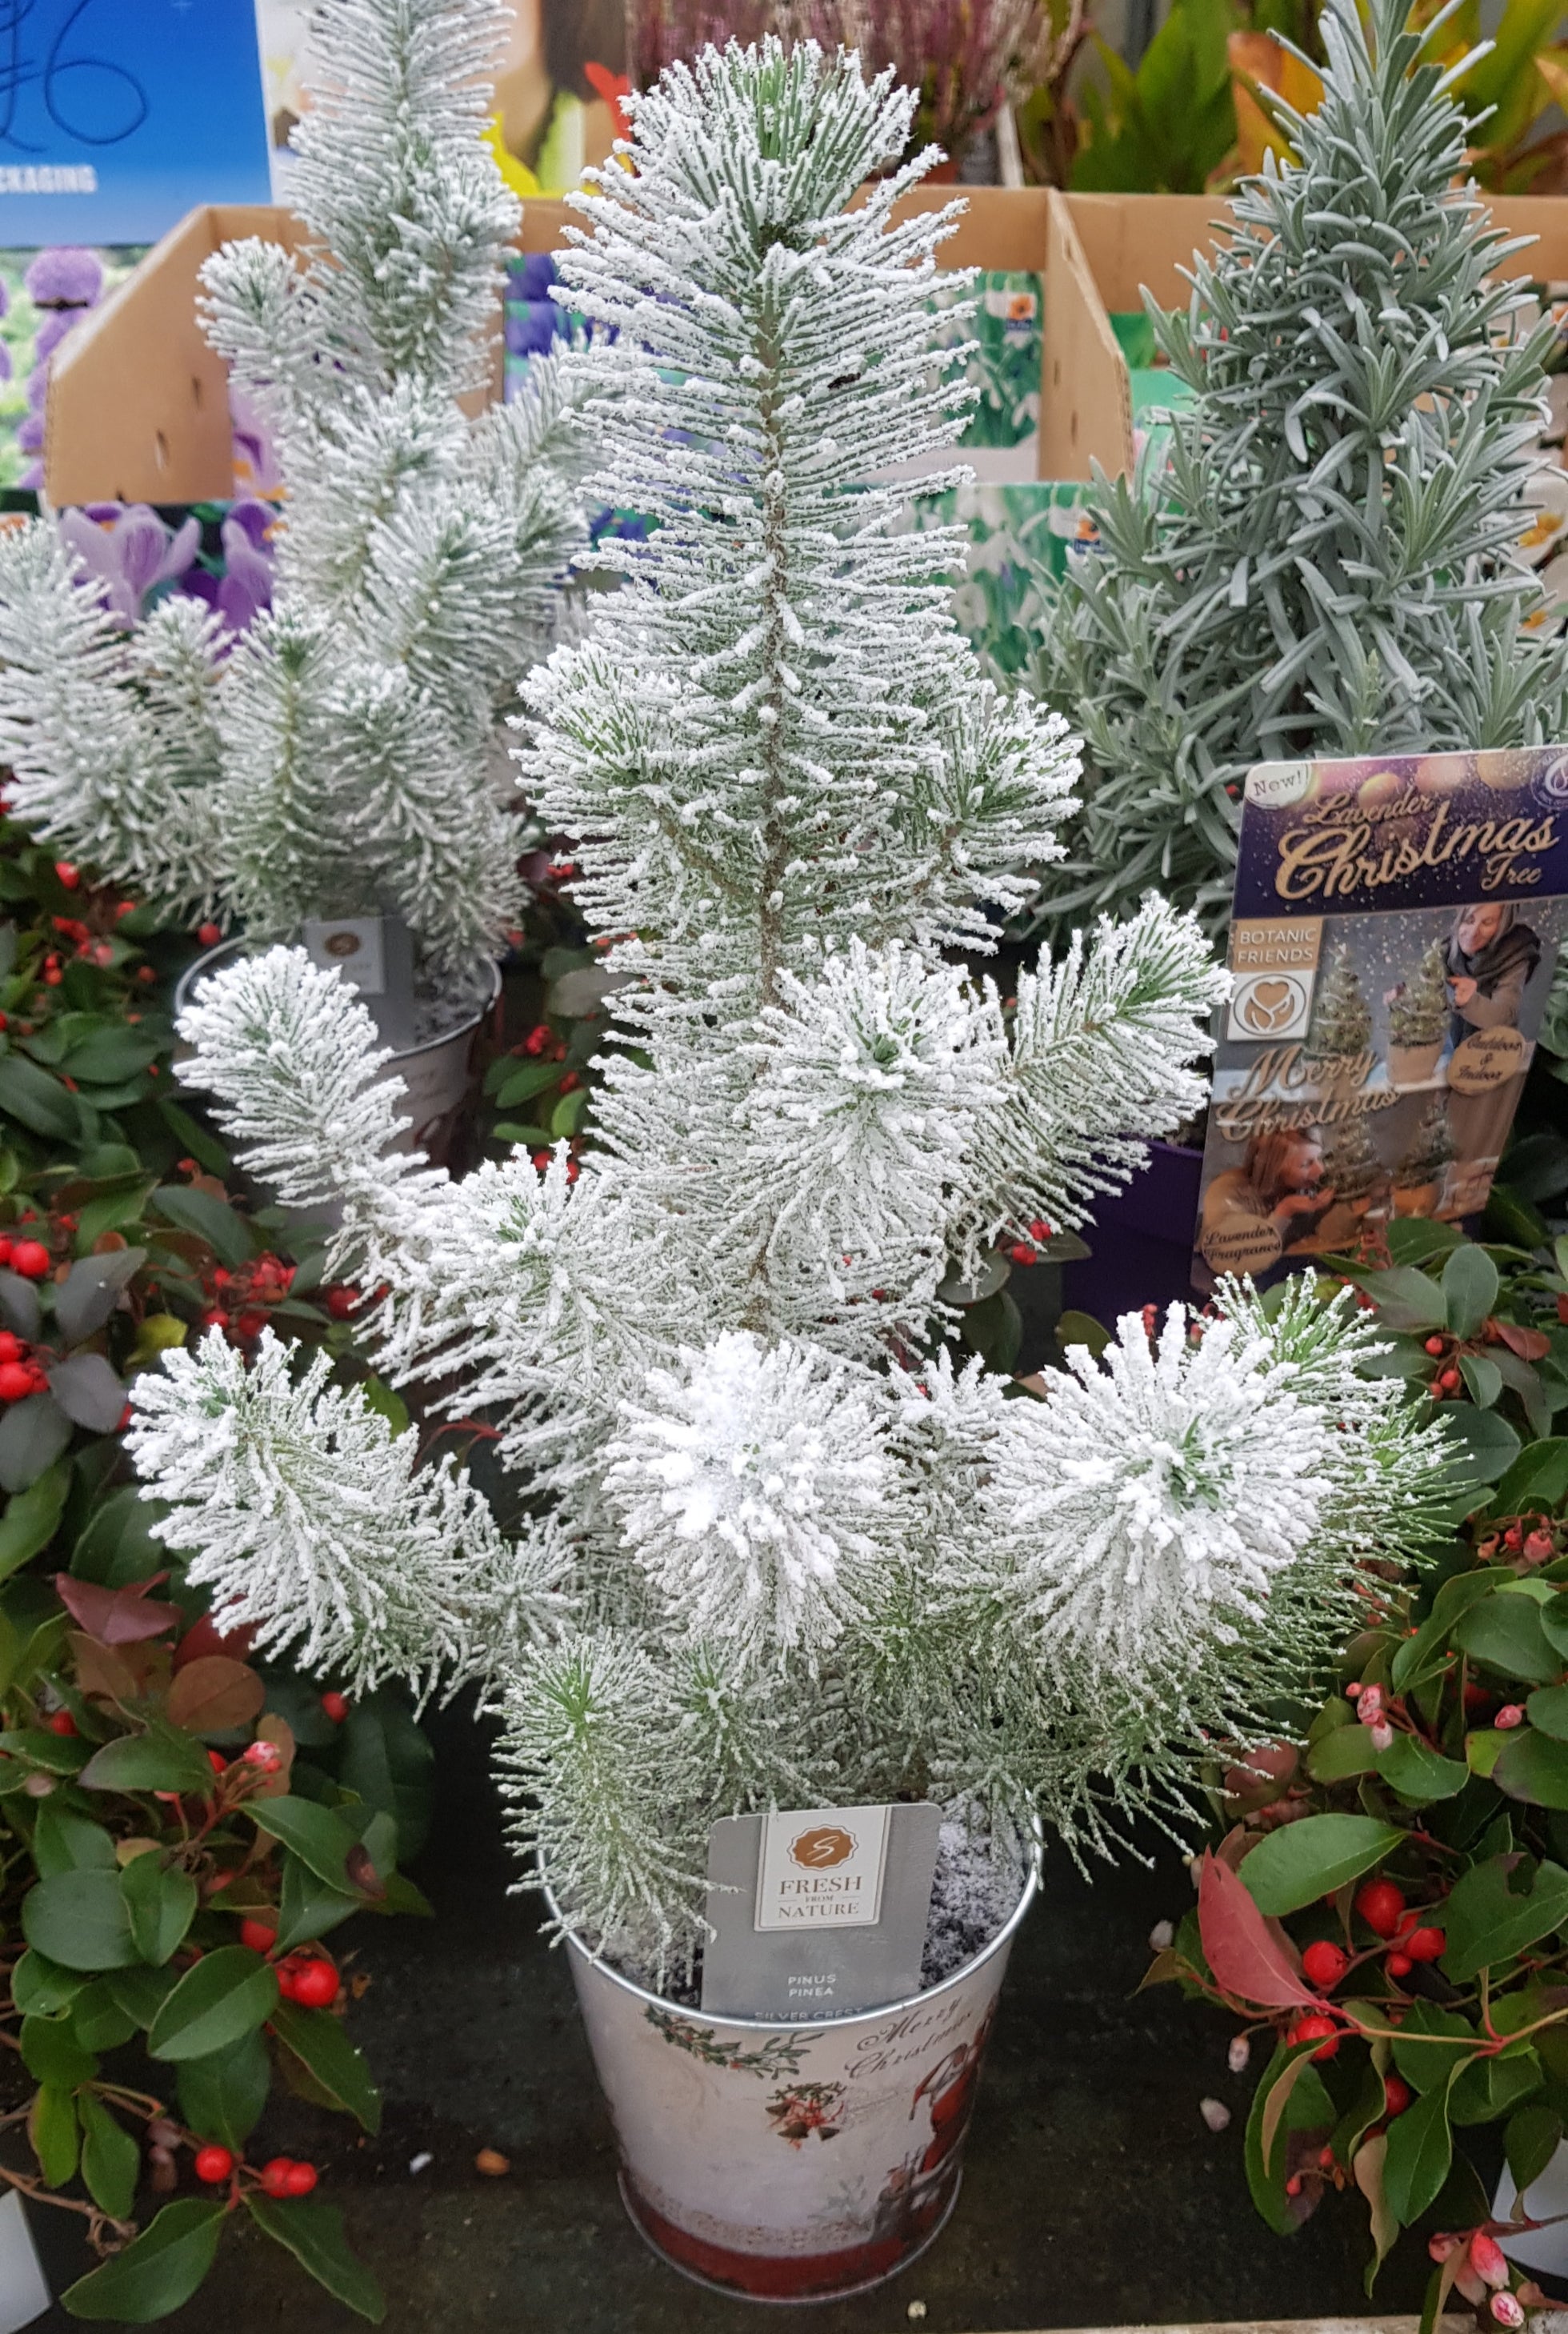 Pine with snow decoration.